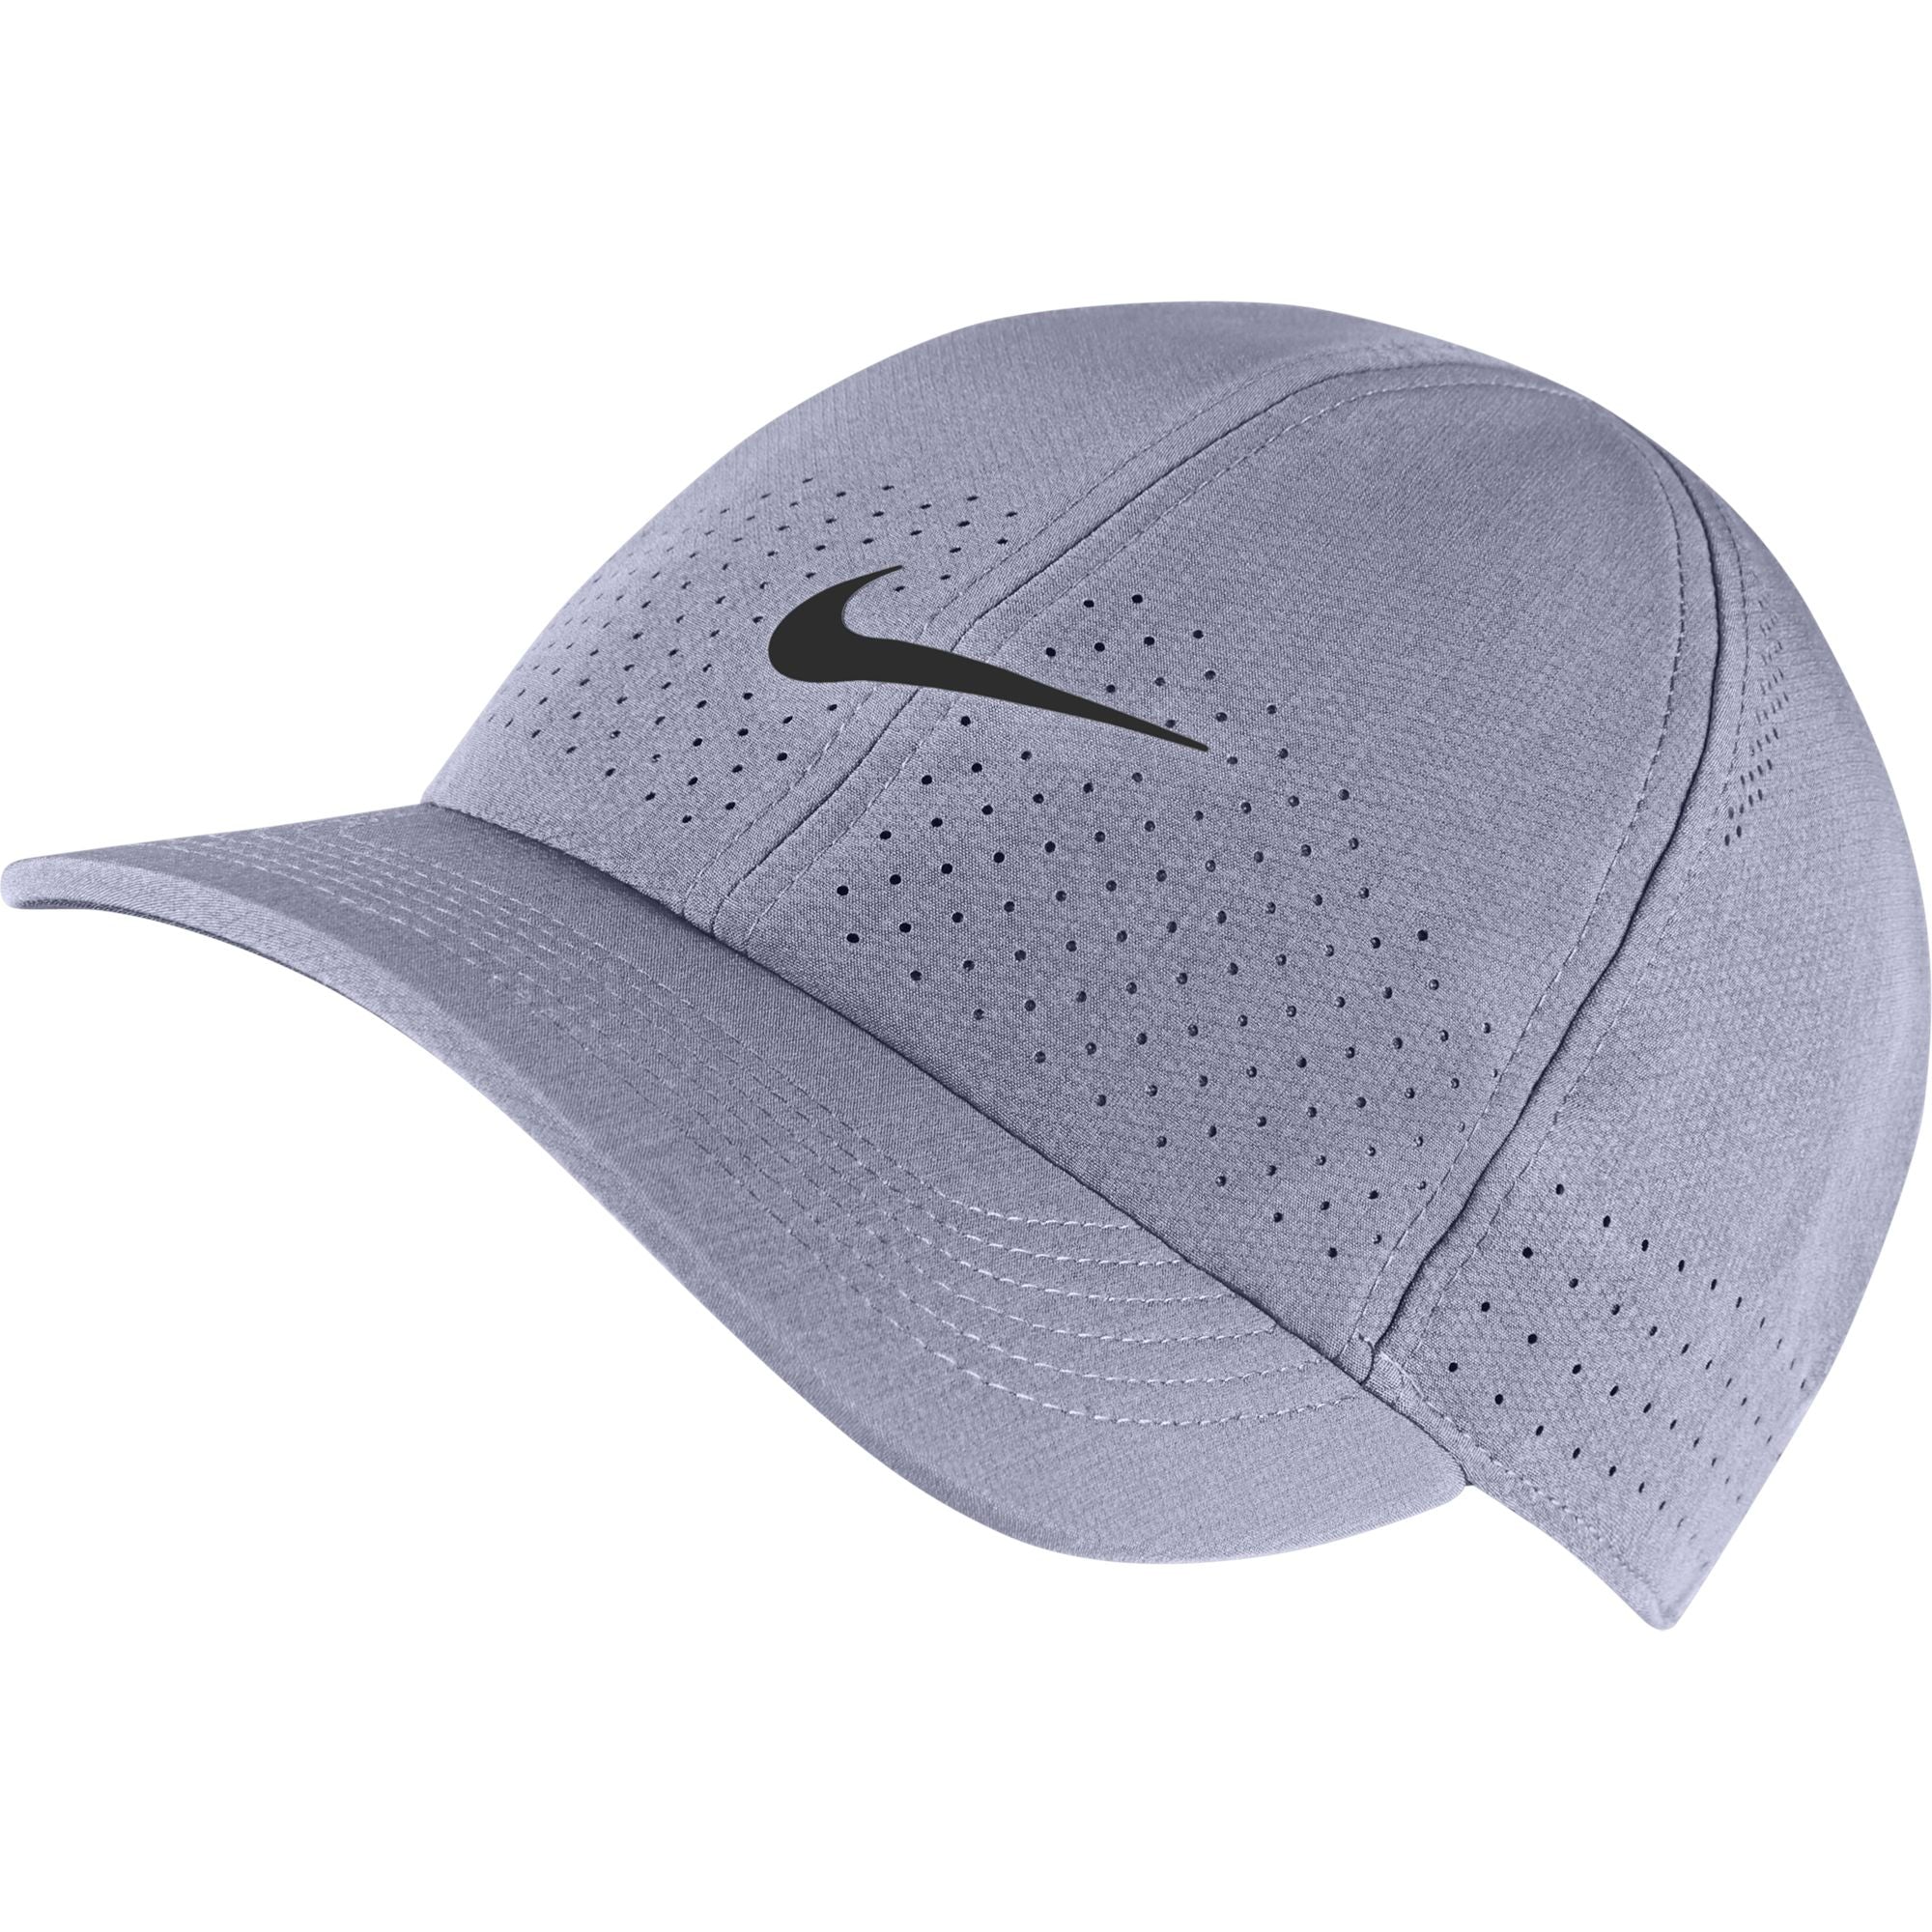 Nike Court Aerobill Advantage Men's Tennis Cap